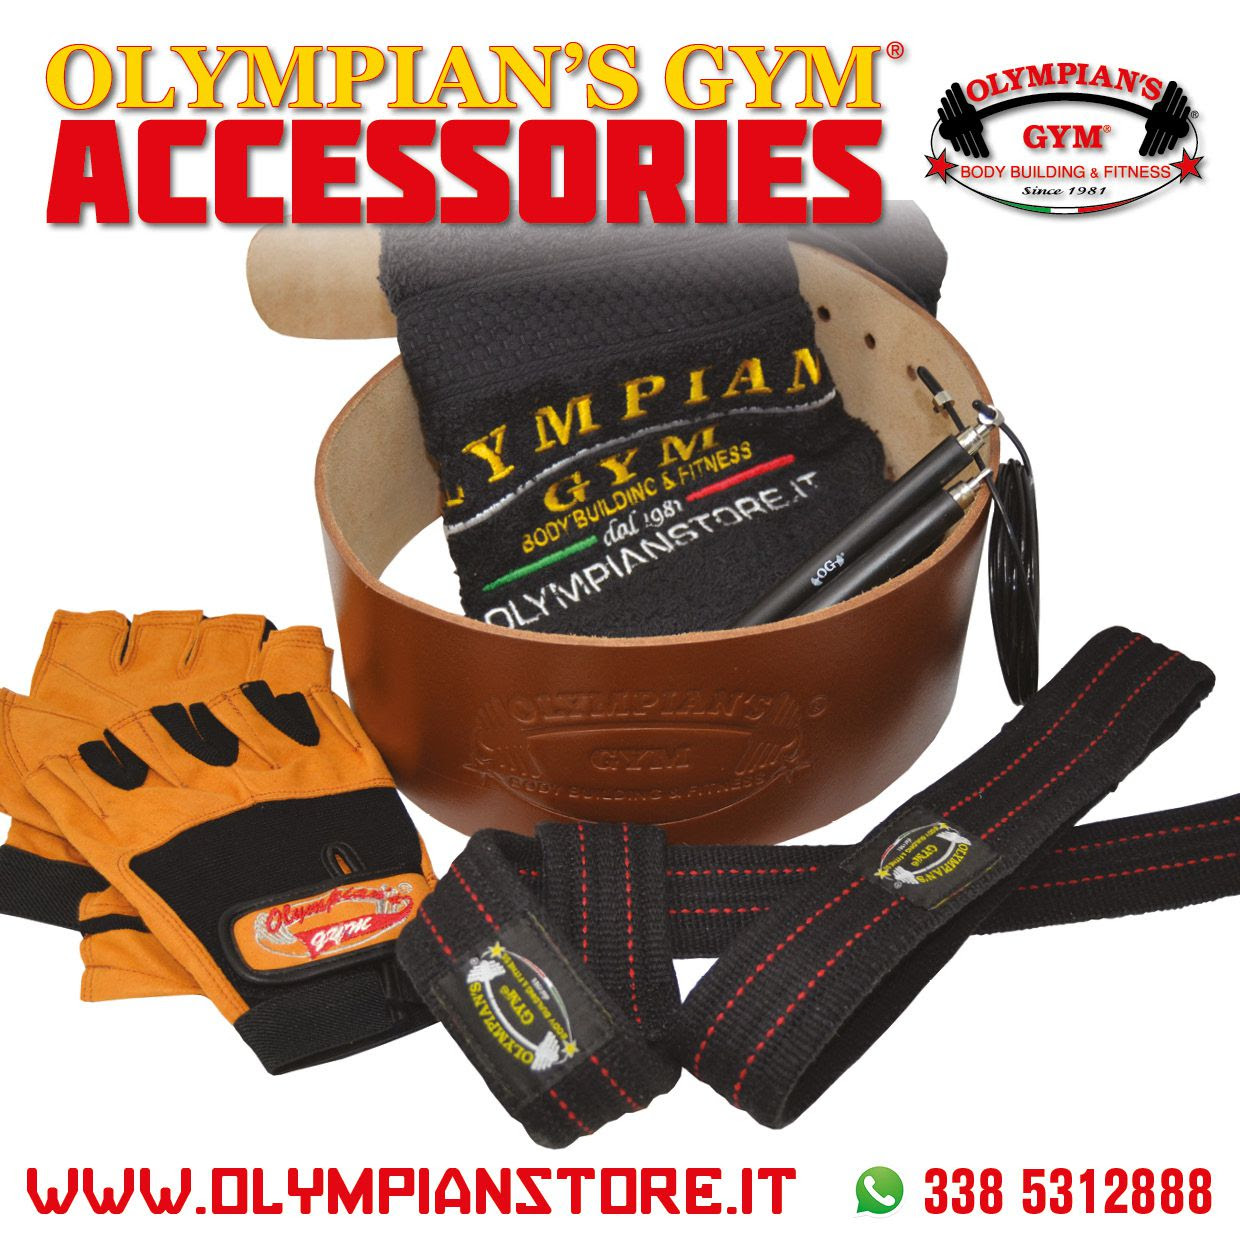 https://www.olympianstore.it/it/accessori?manufacturer=5